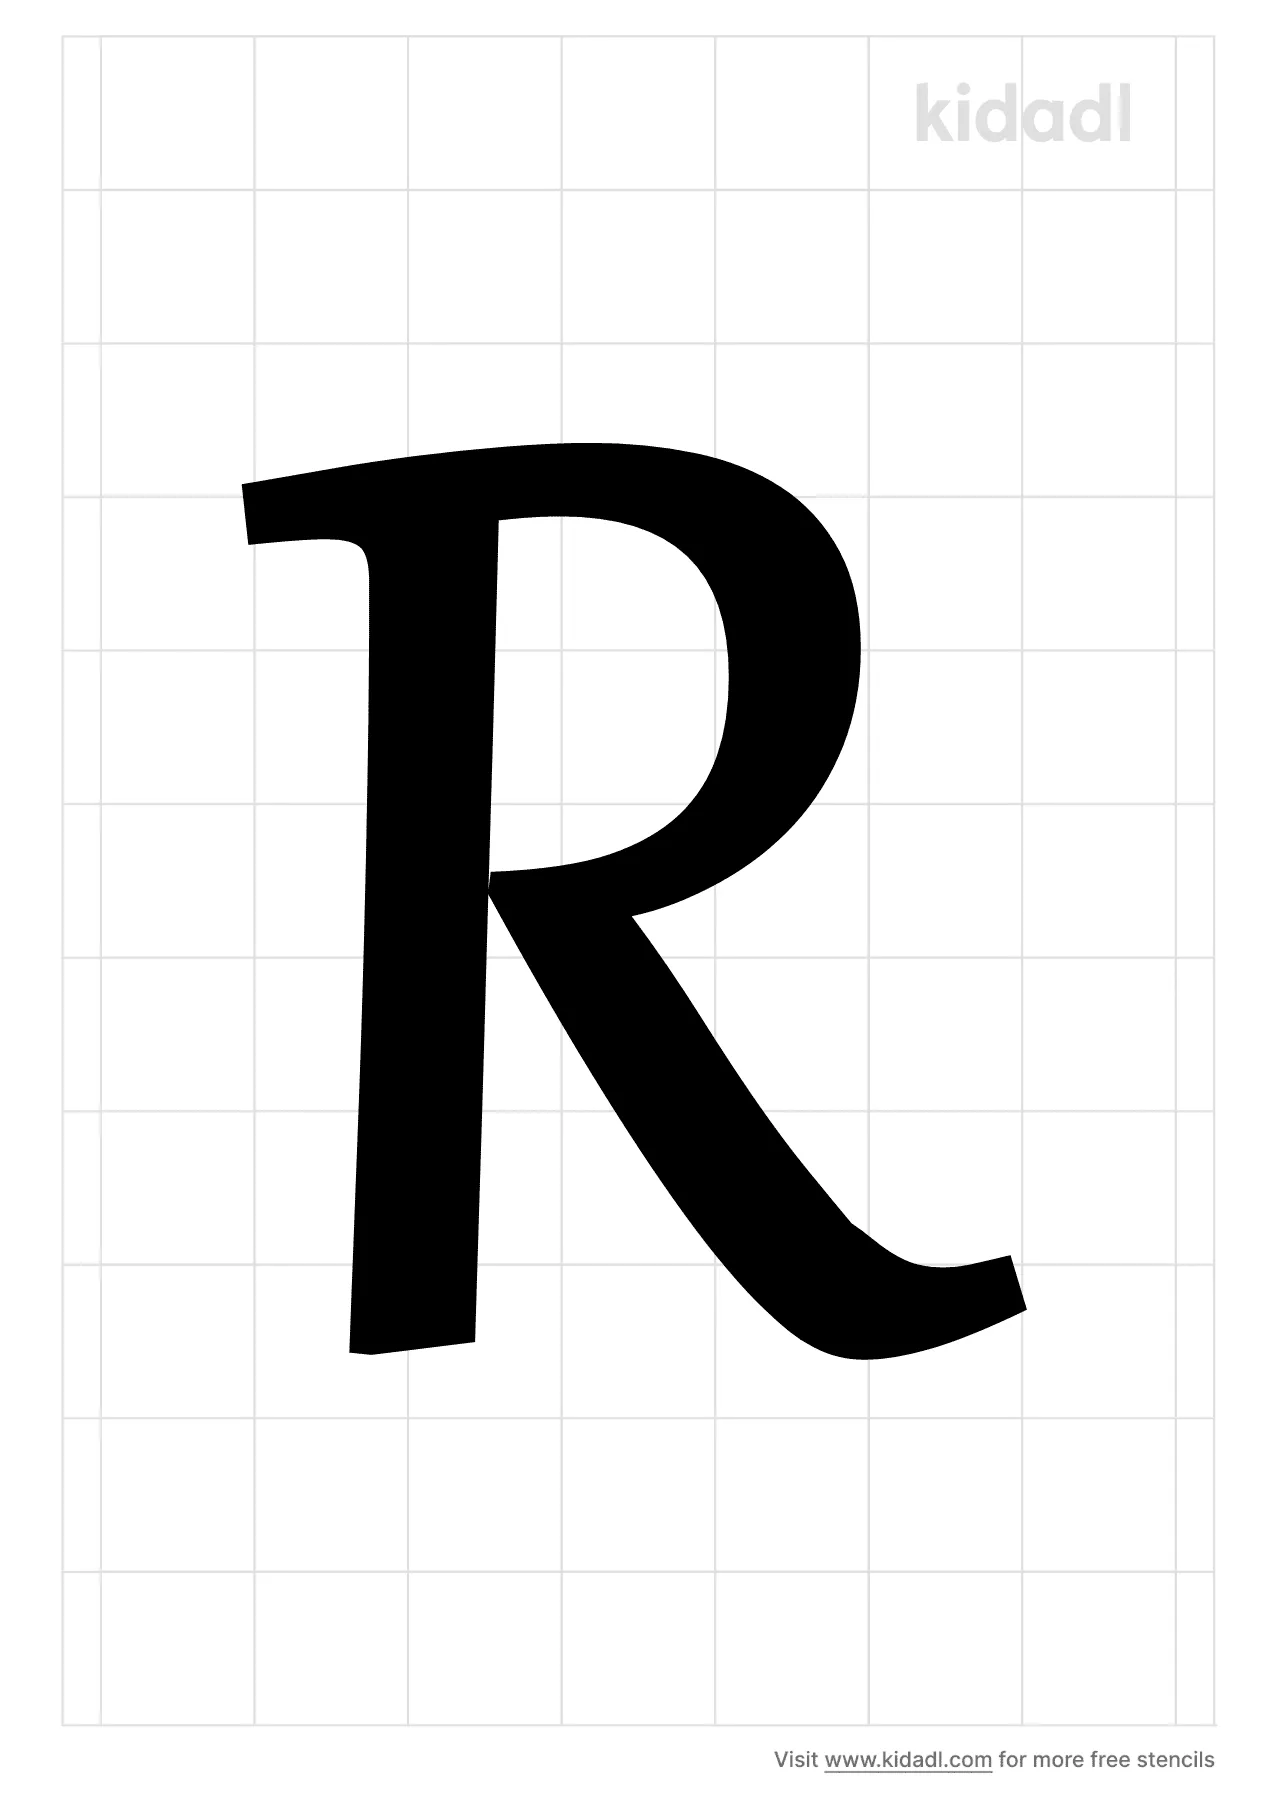 r letter stencils free printable letters stencils kidadl and letters stencils free printable stencils kidadl